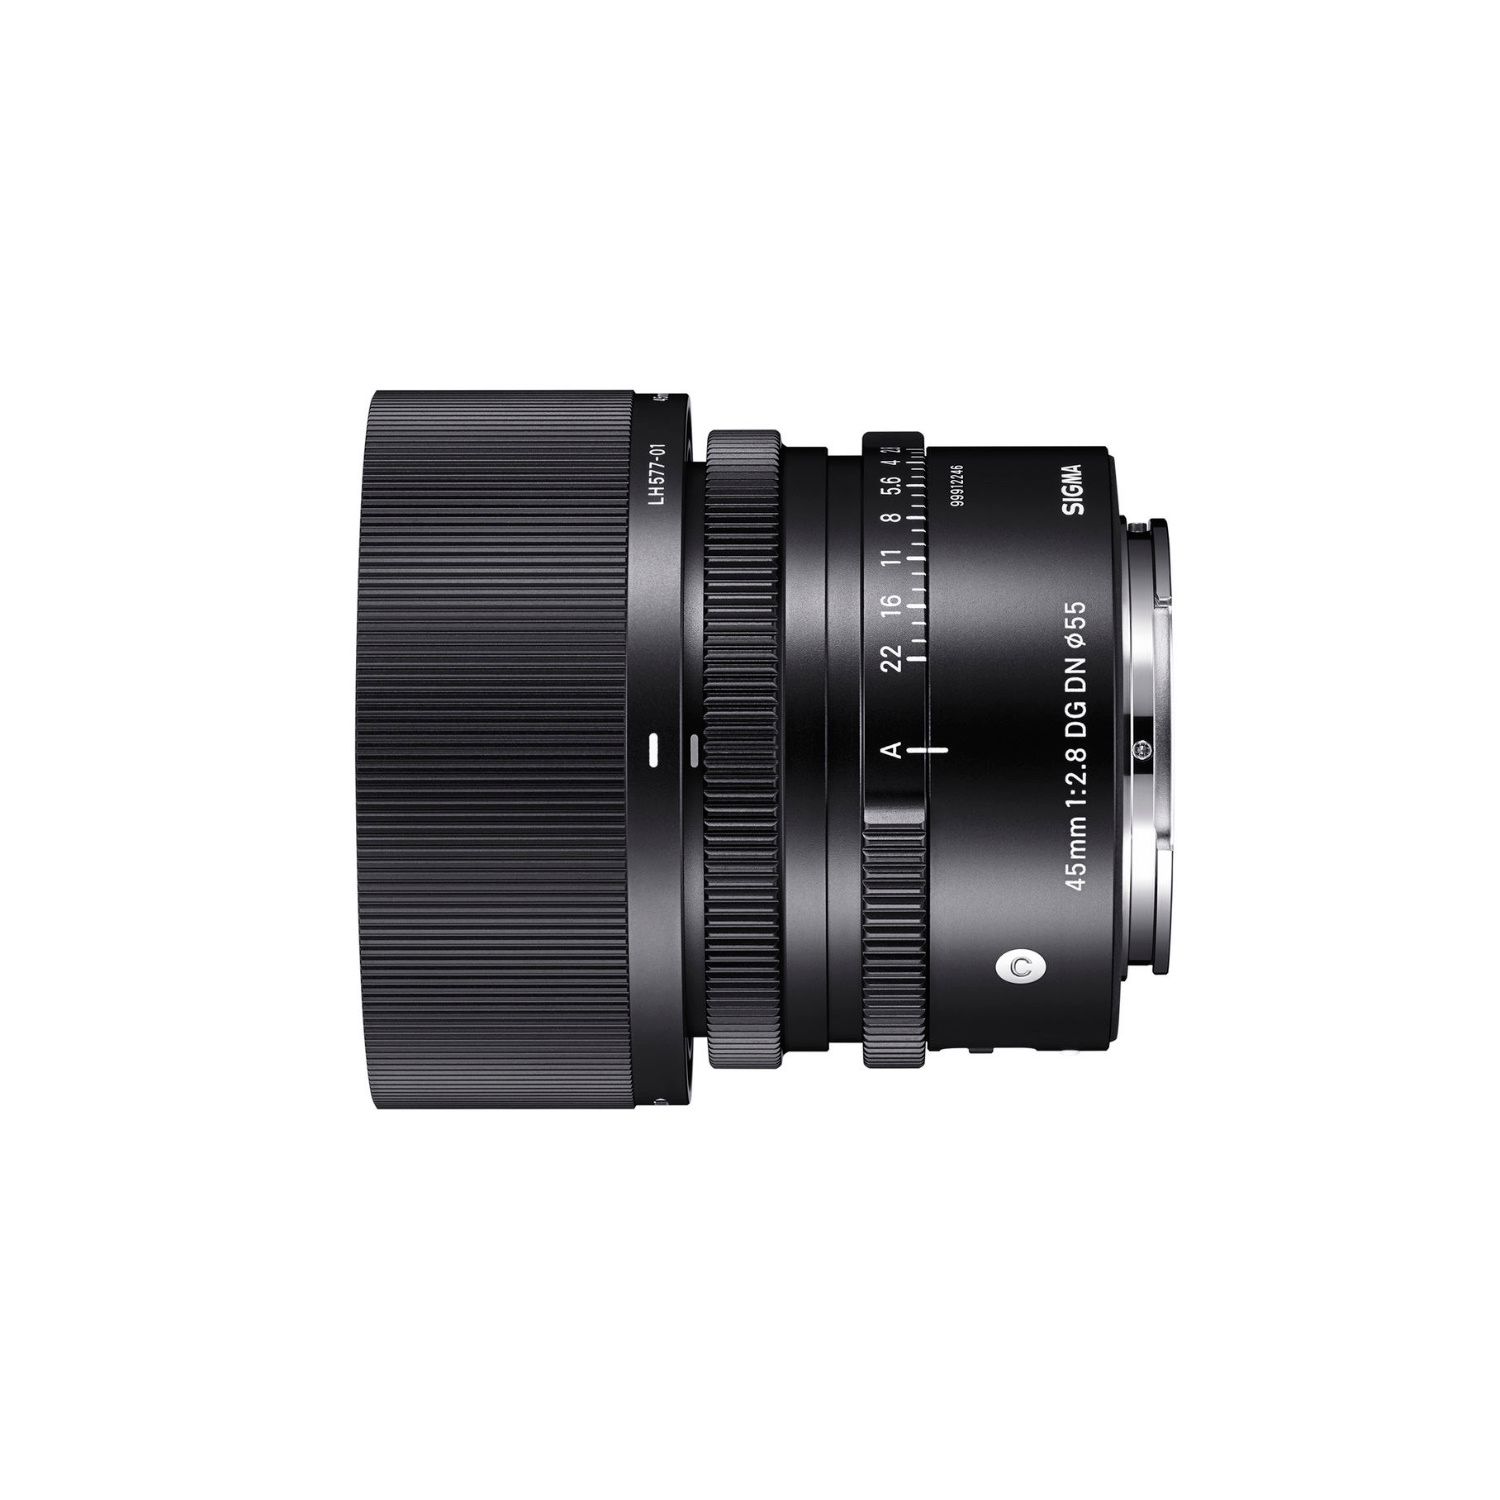 Sigma FP Digital Camera with 45mm f/2.8 DG DN Lens